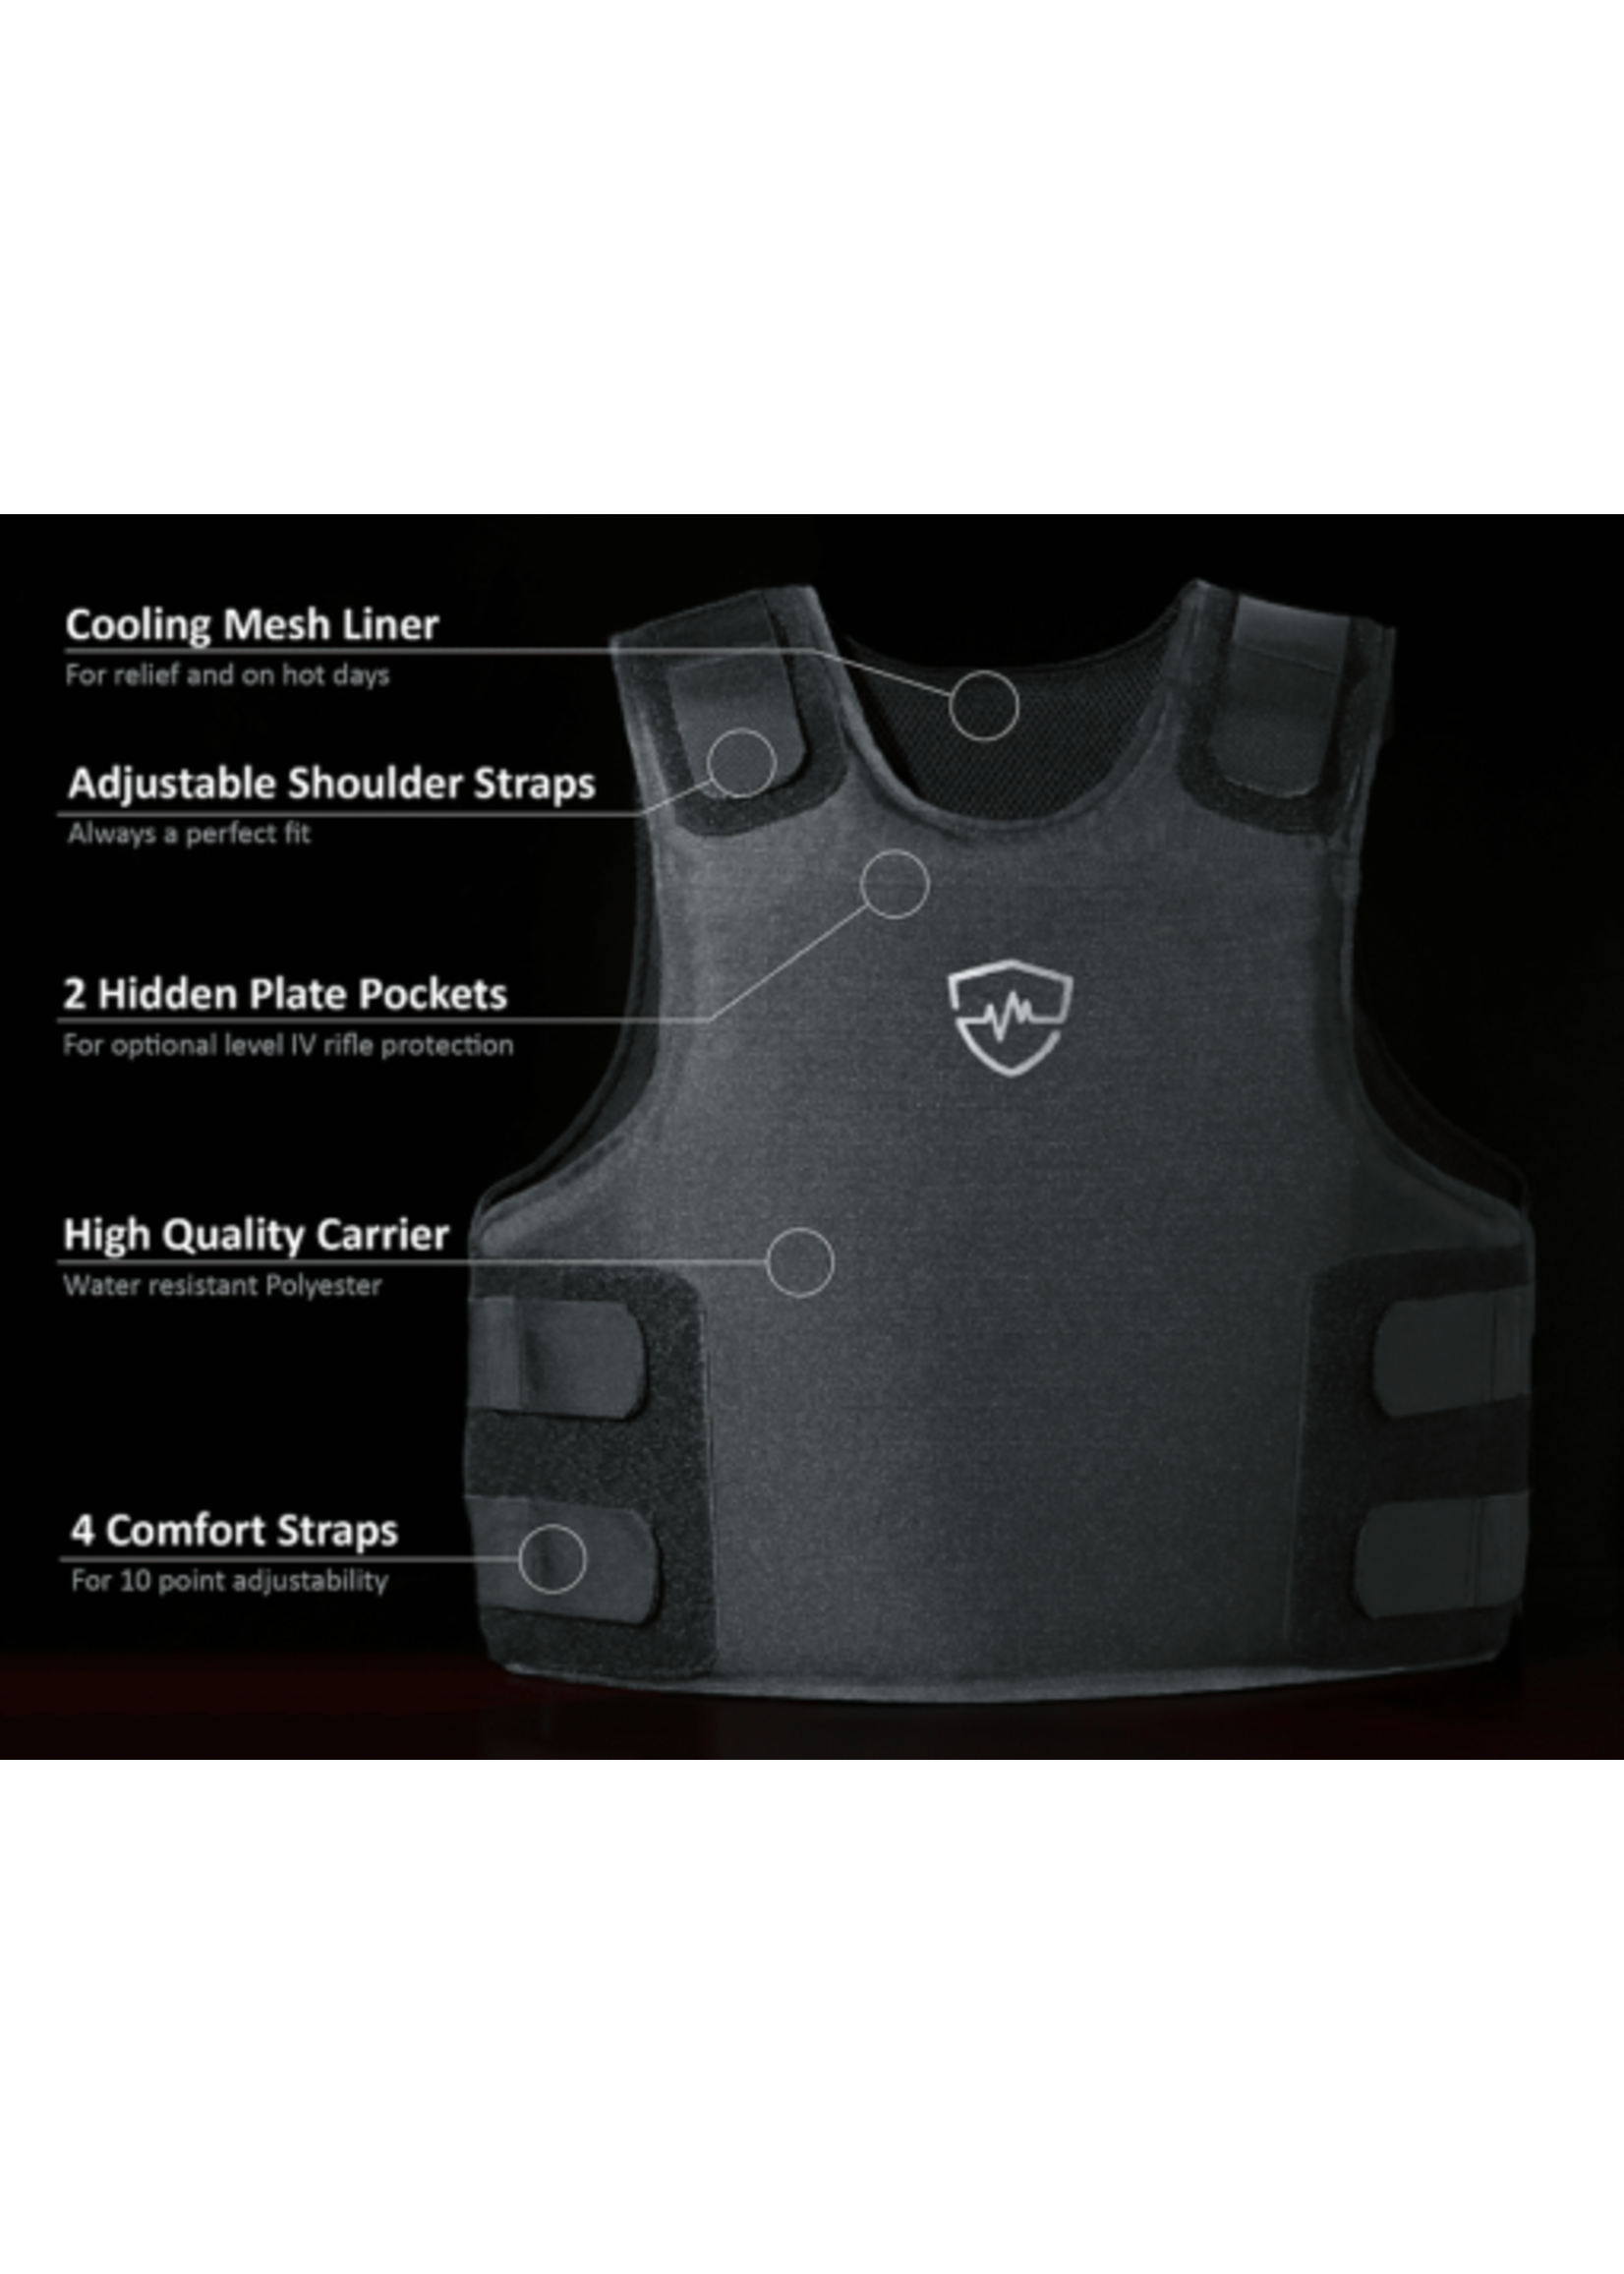 SAFE LIFE DEFENSE Tactical Enhanced Multi-Threat Vest Level IIIA+